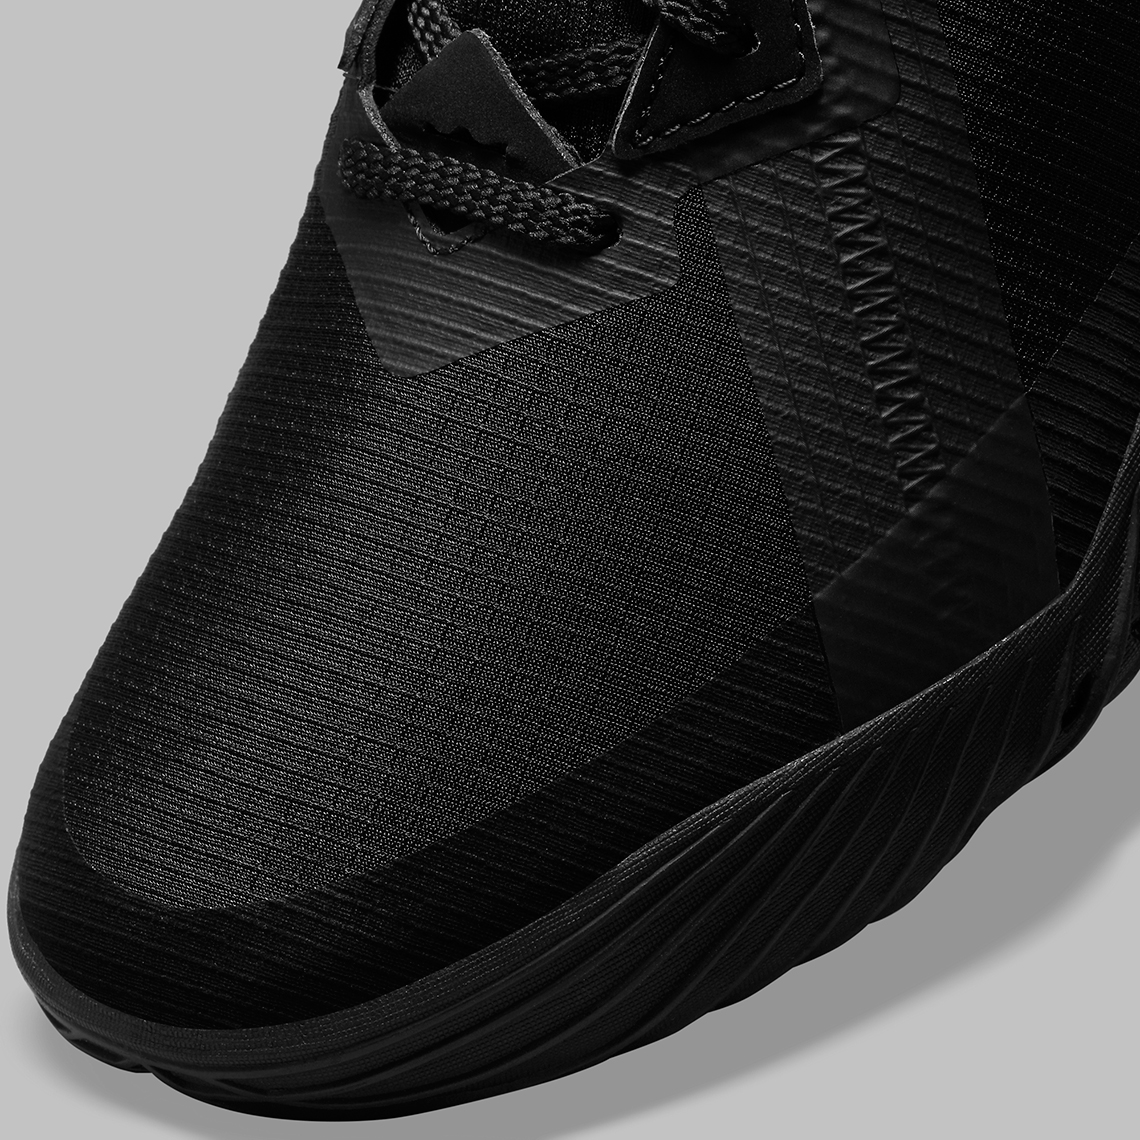 Nike Lebron 18 Low Black Cv7562 004 Release Date 7